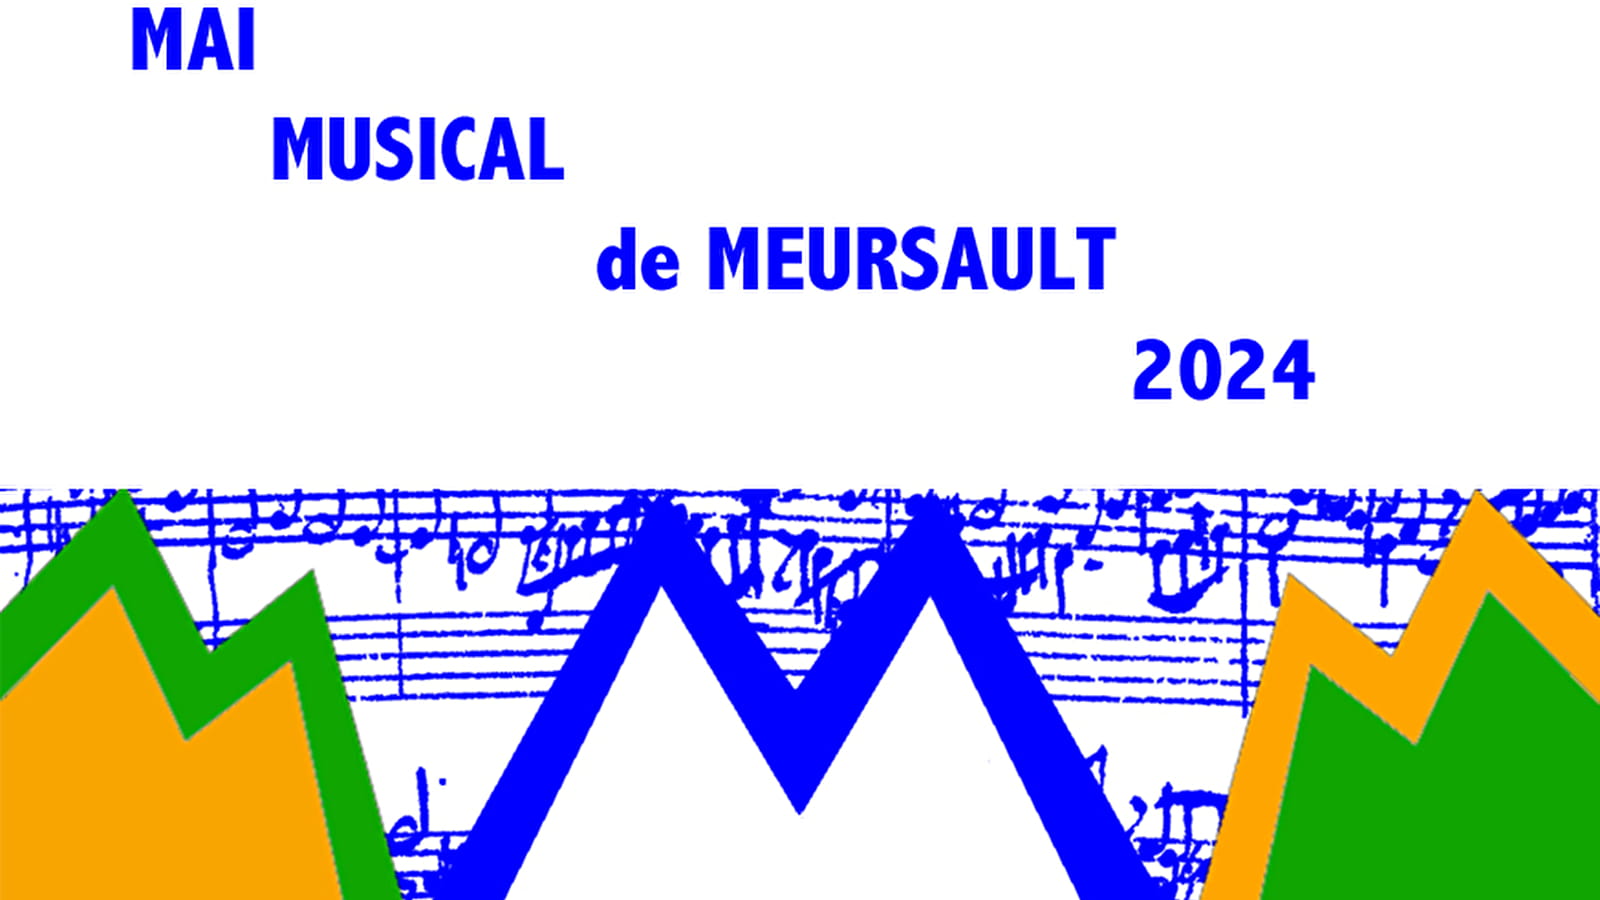 Le Mai musical de Meursault Le 26 mai 2024